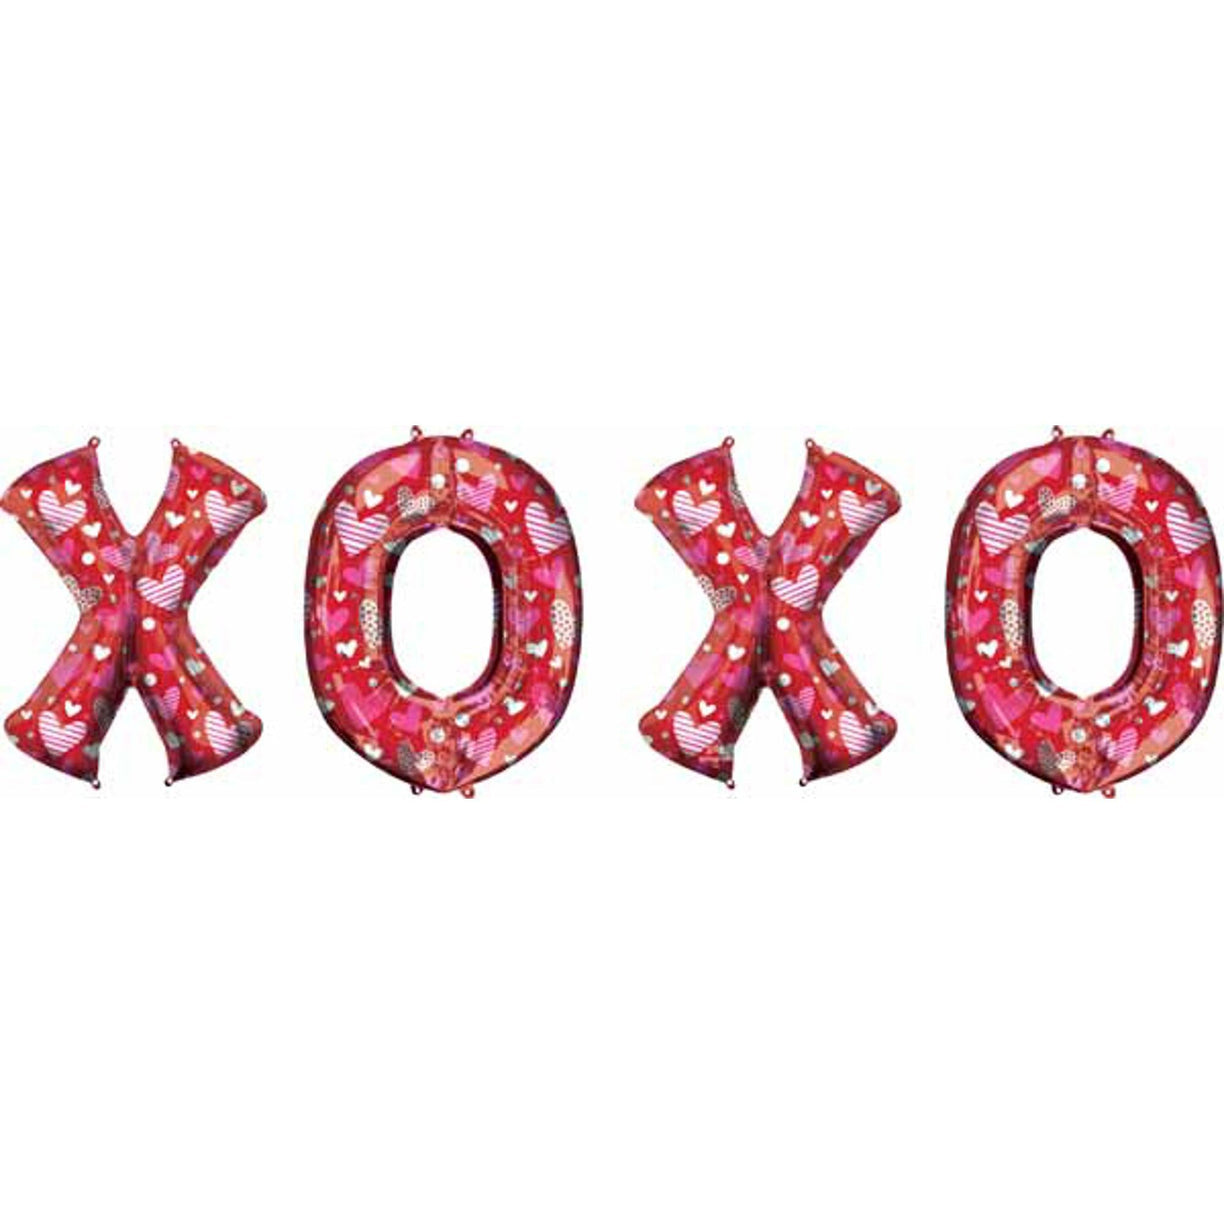 XOXO 34’ Letters Balloons